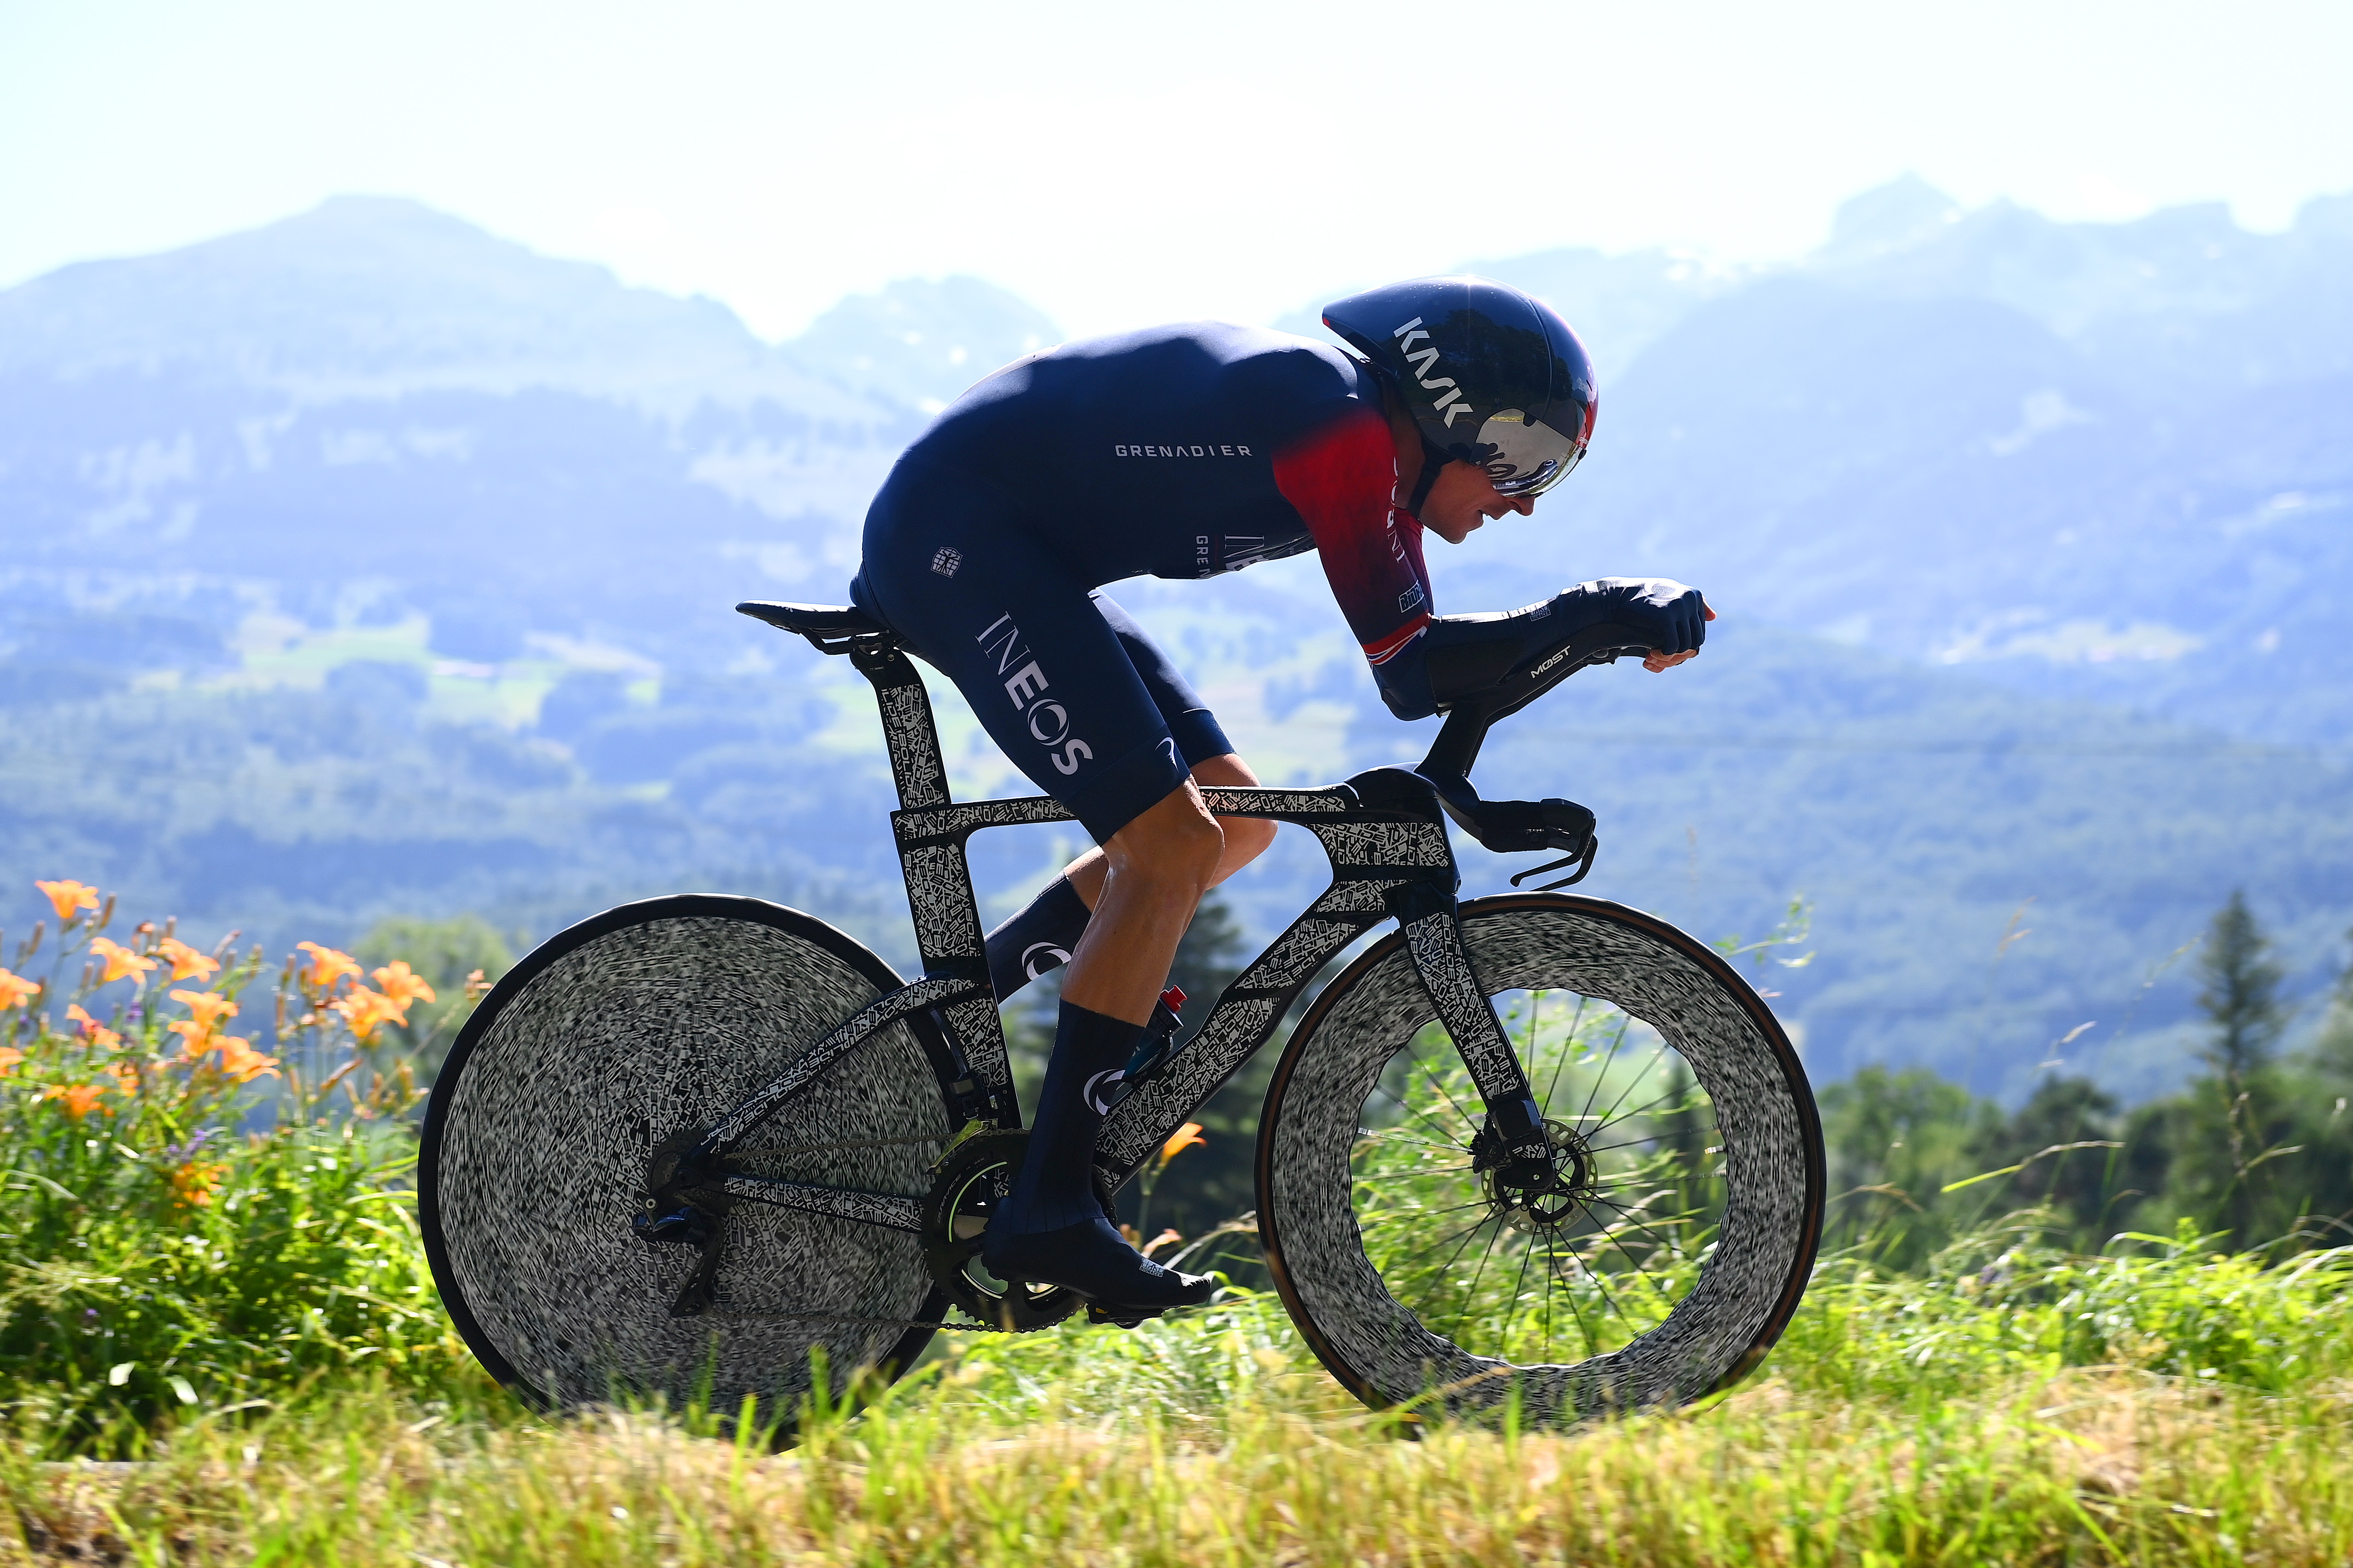 Pinarello Dogma XC mountain bike breaks cover